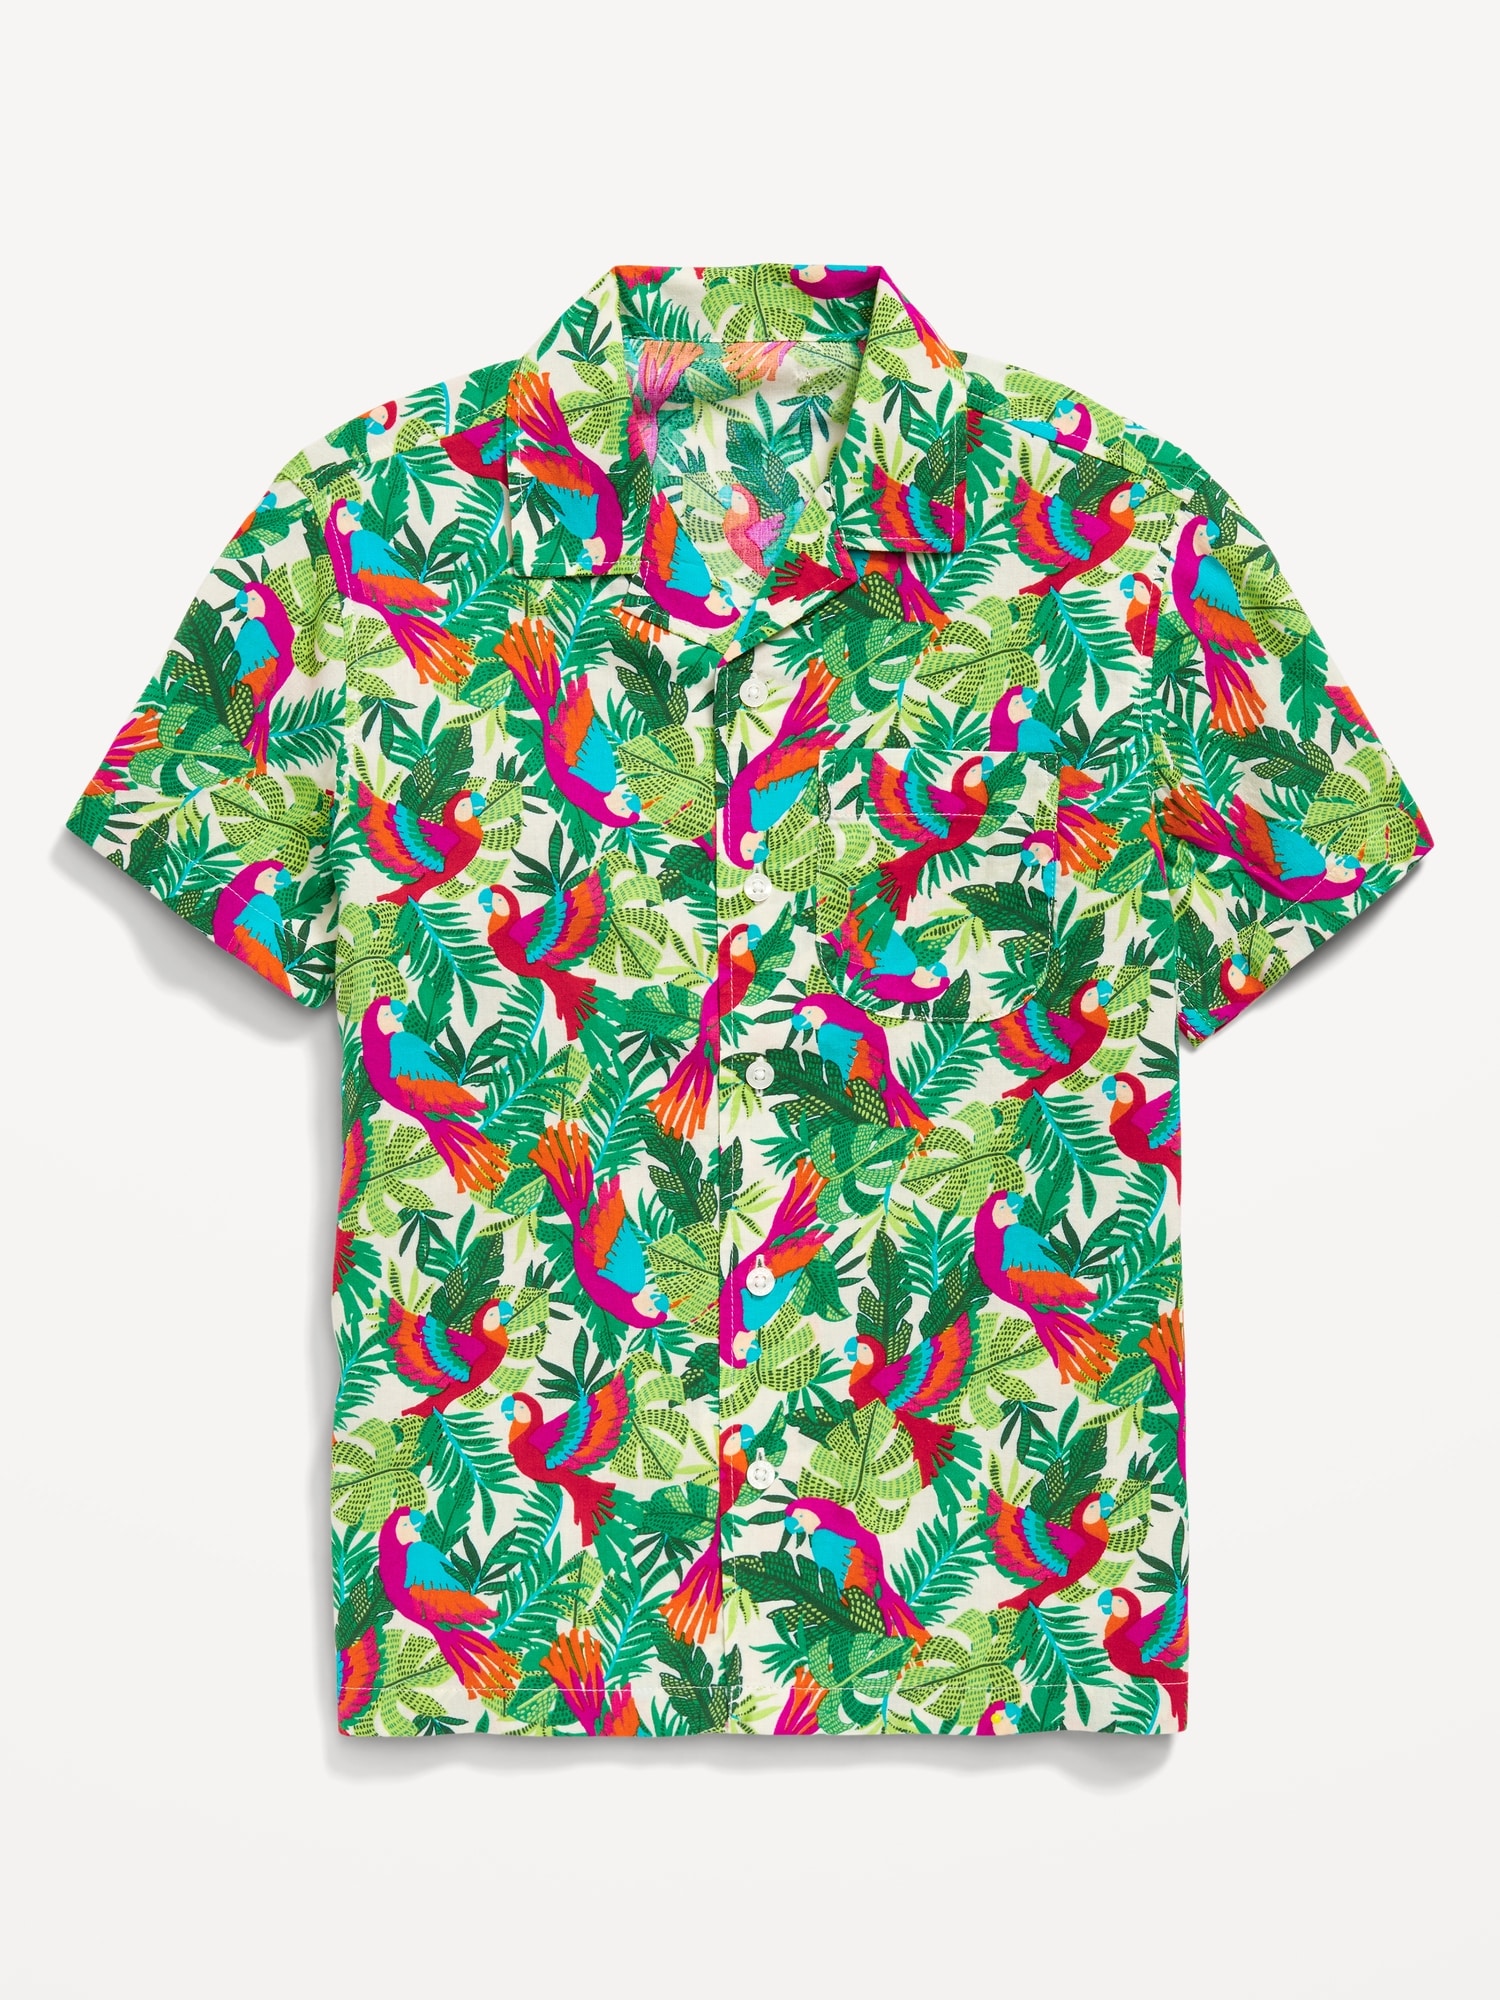 Short-Sleeve Printed Camp Shirt for Boys